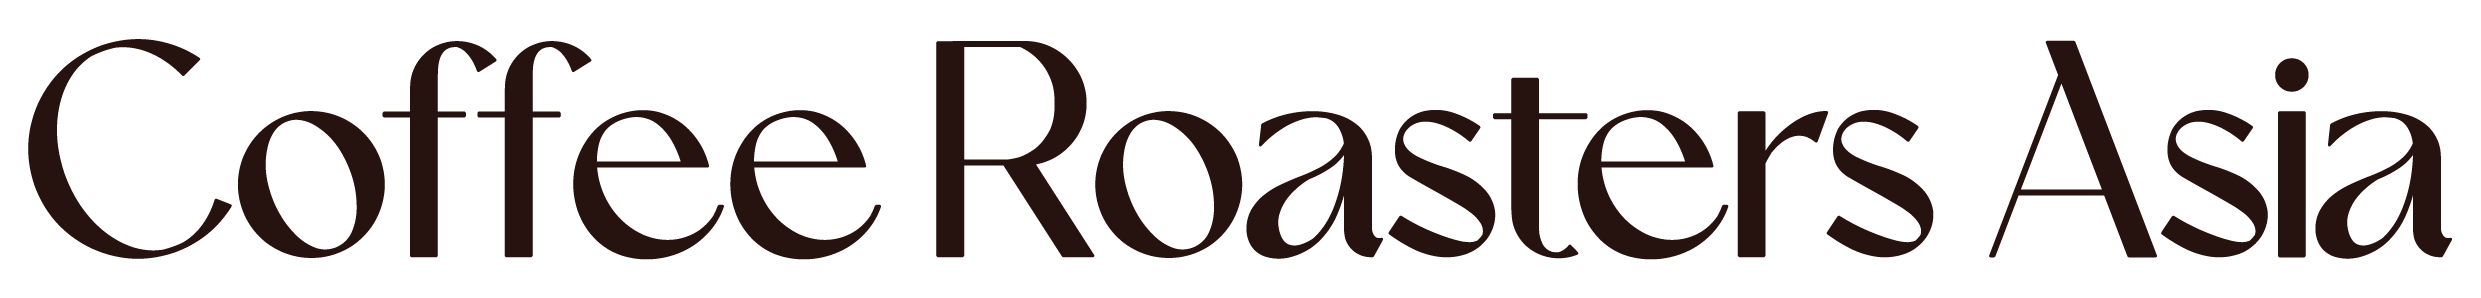 Coffee Roasters Asia Logo